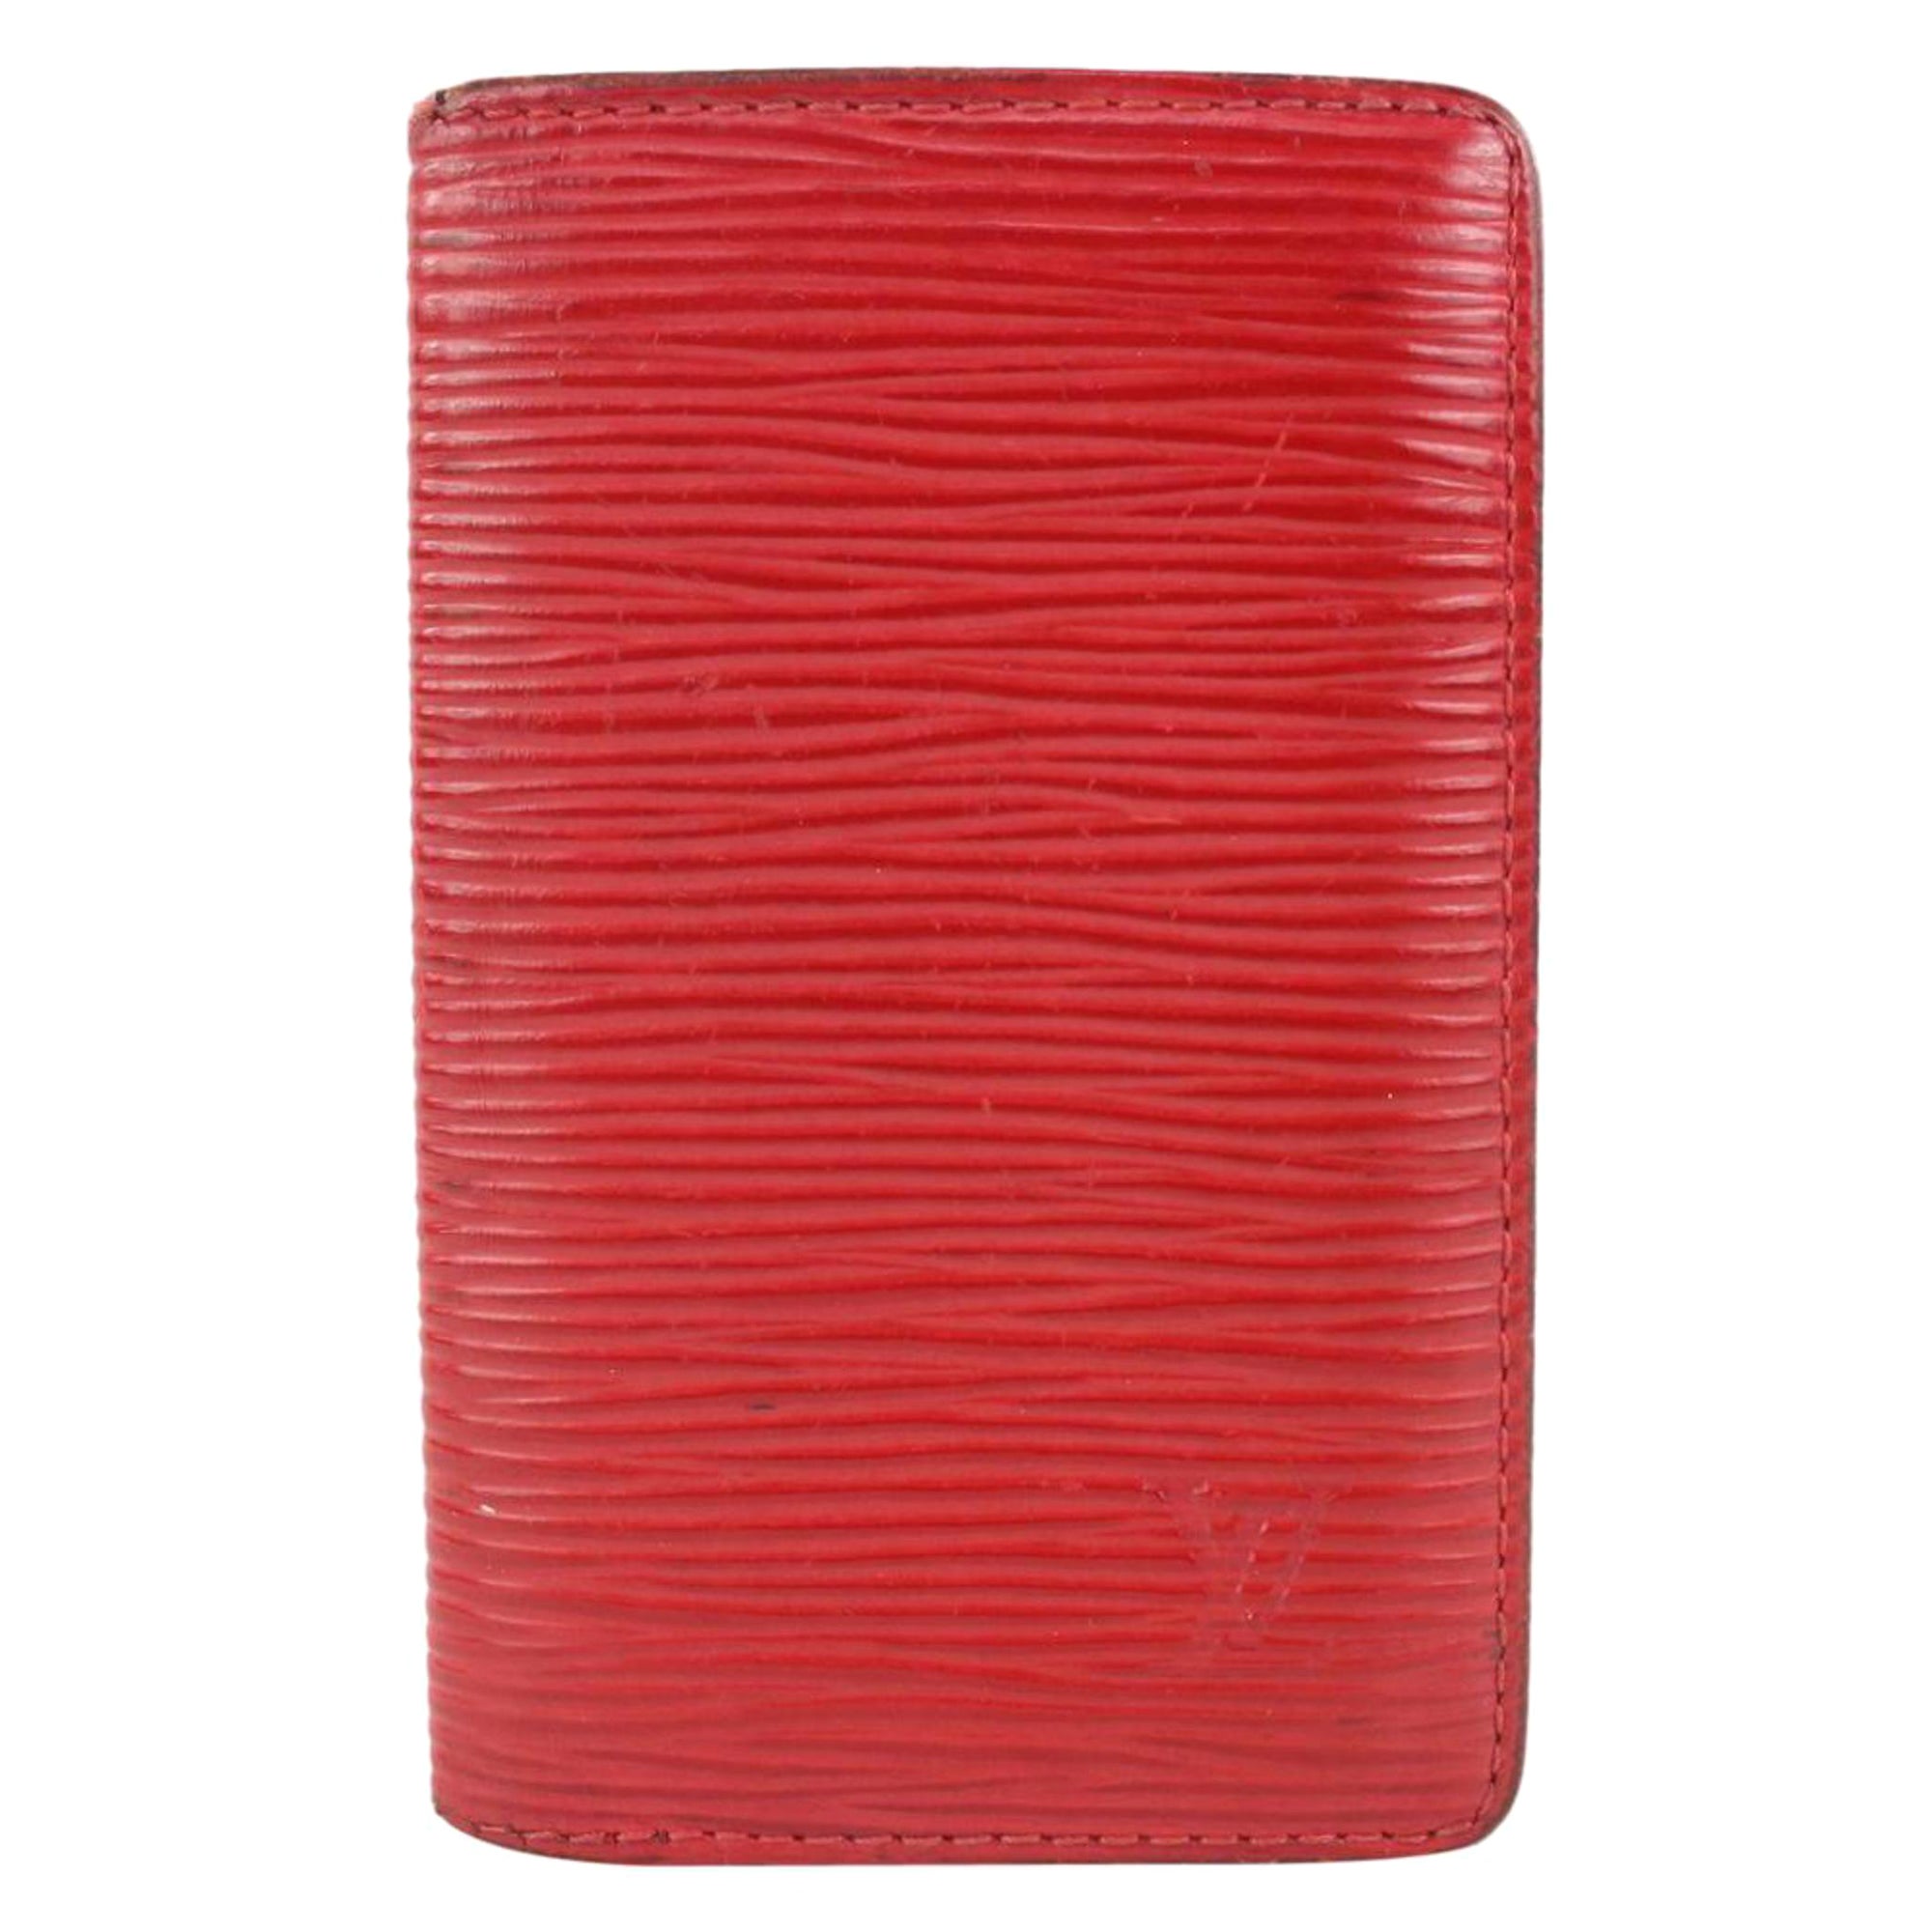 Louis Vuitton Red Epi Leather Card Holder Wallet Case 0L1230